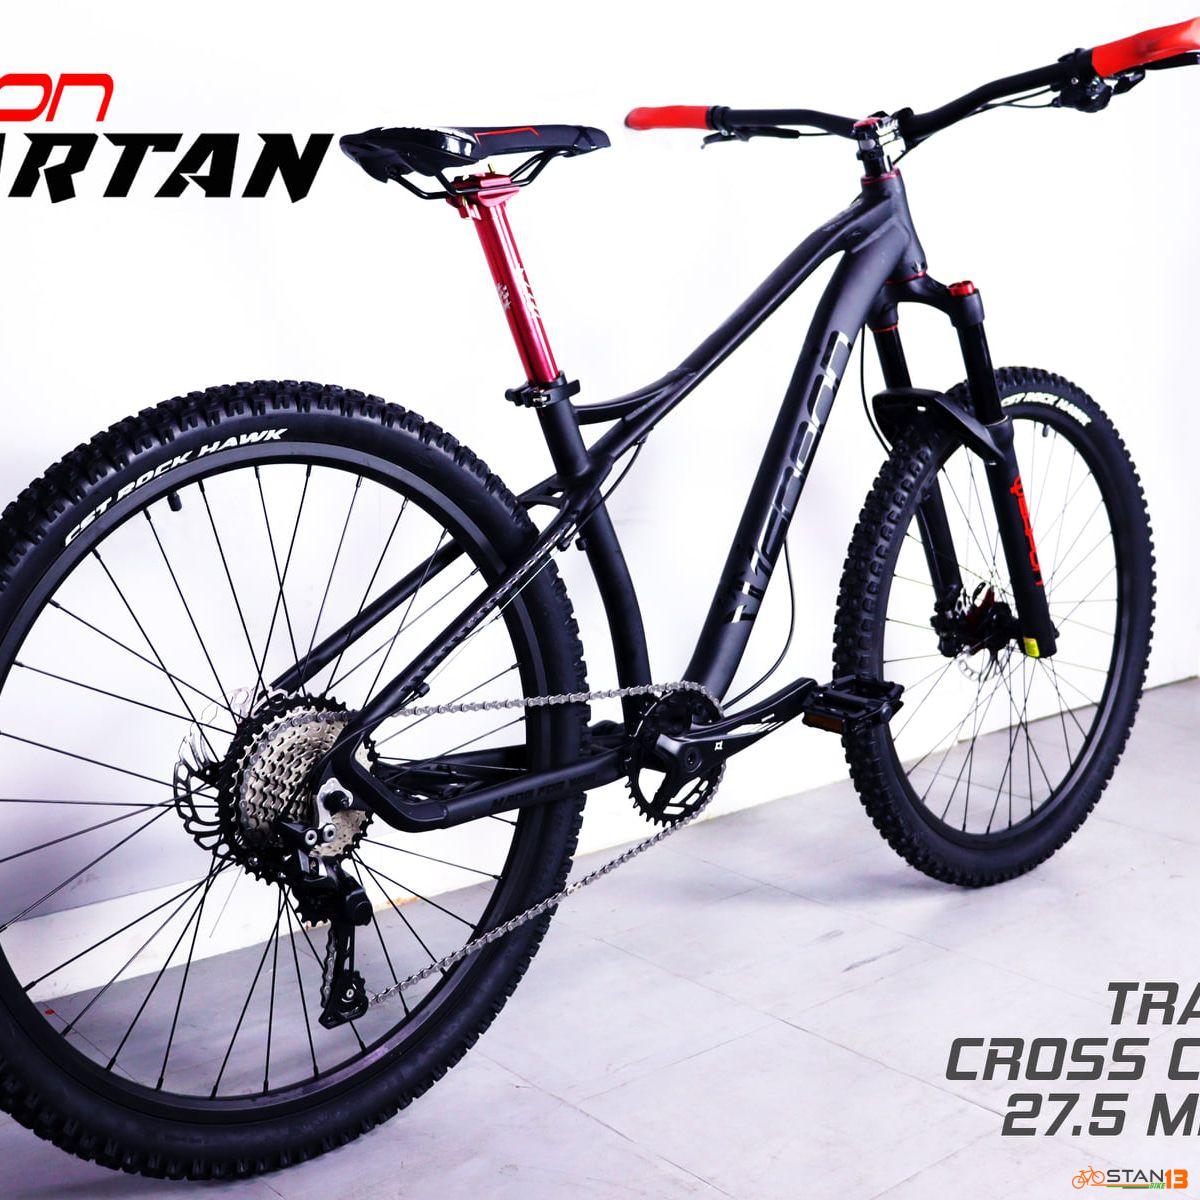 Spartan Trail Bike Deore Gears Air Fork Limited Edition